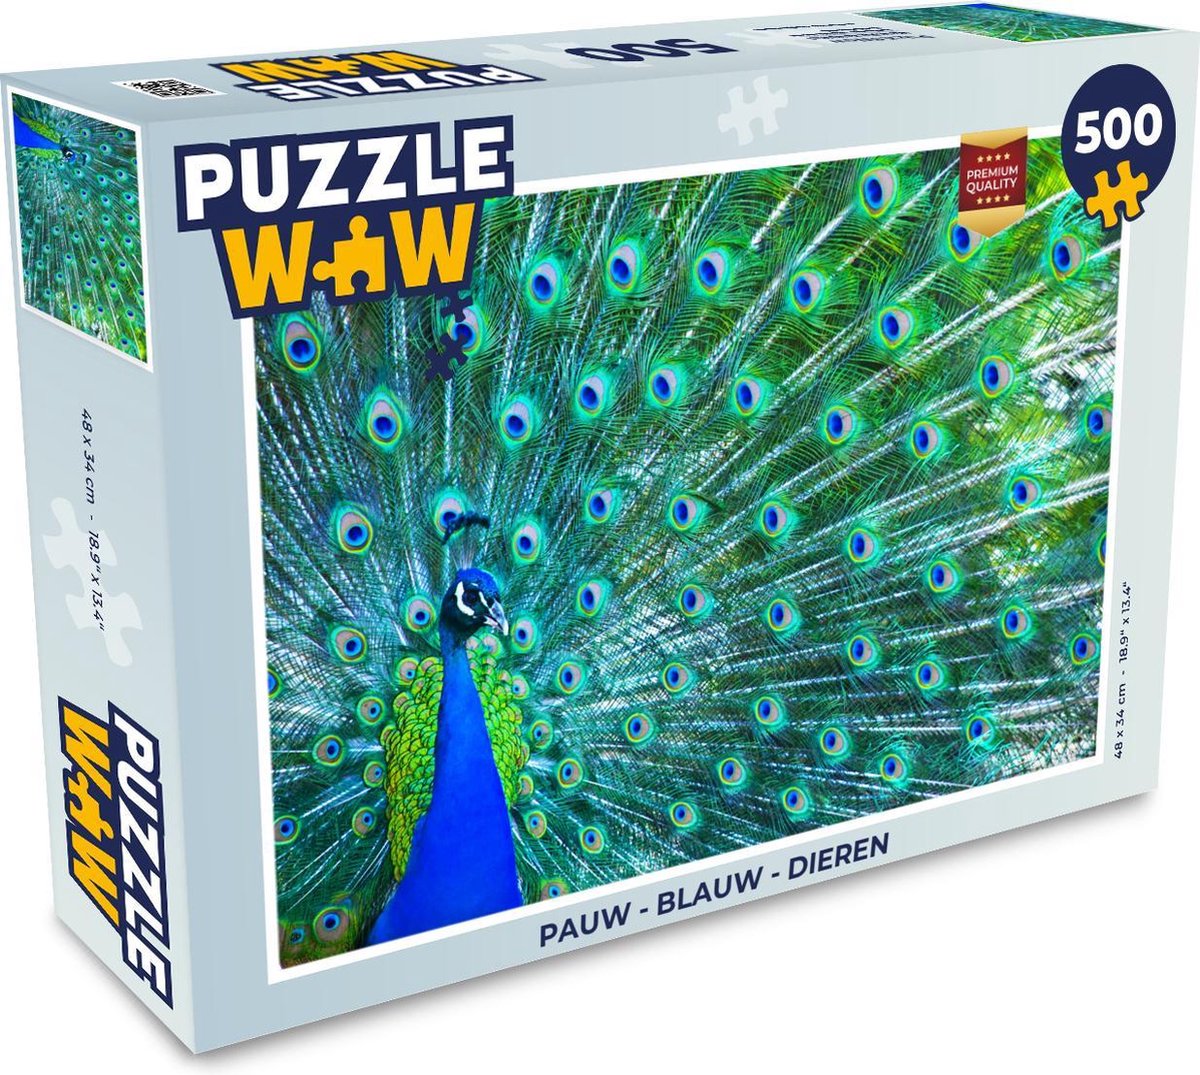 Afbeelding van product PuzzleWow  Puzzel Pauw - Blauw - Dieren - Legpuzzel - Puzzel 500 stukjes